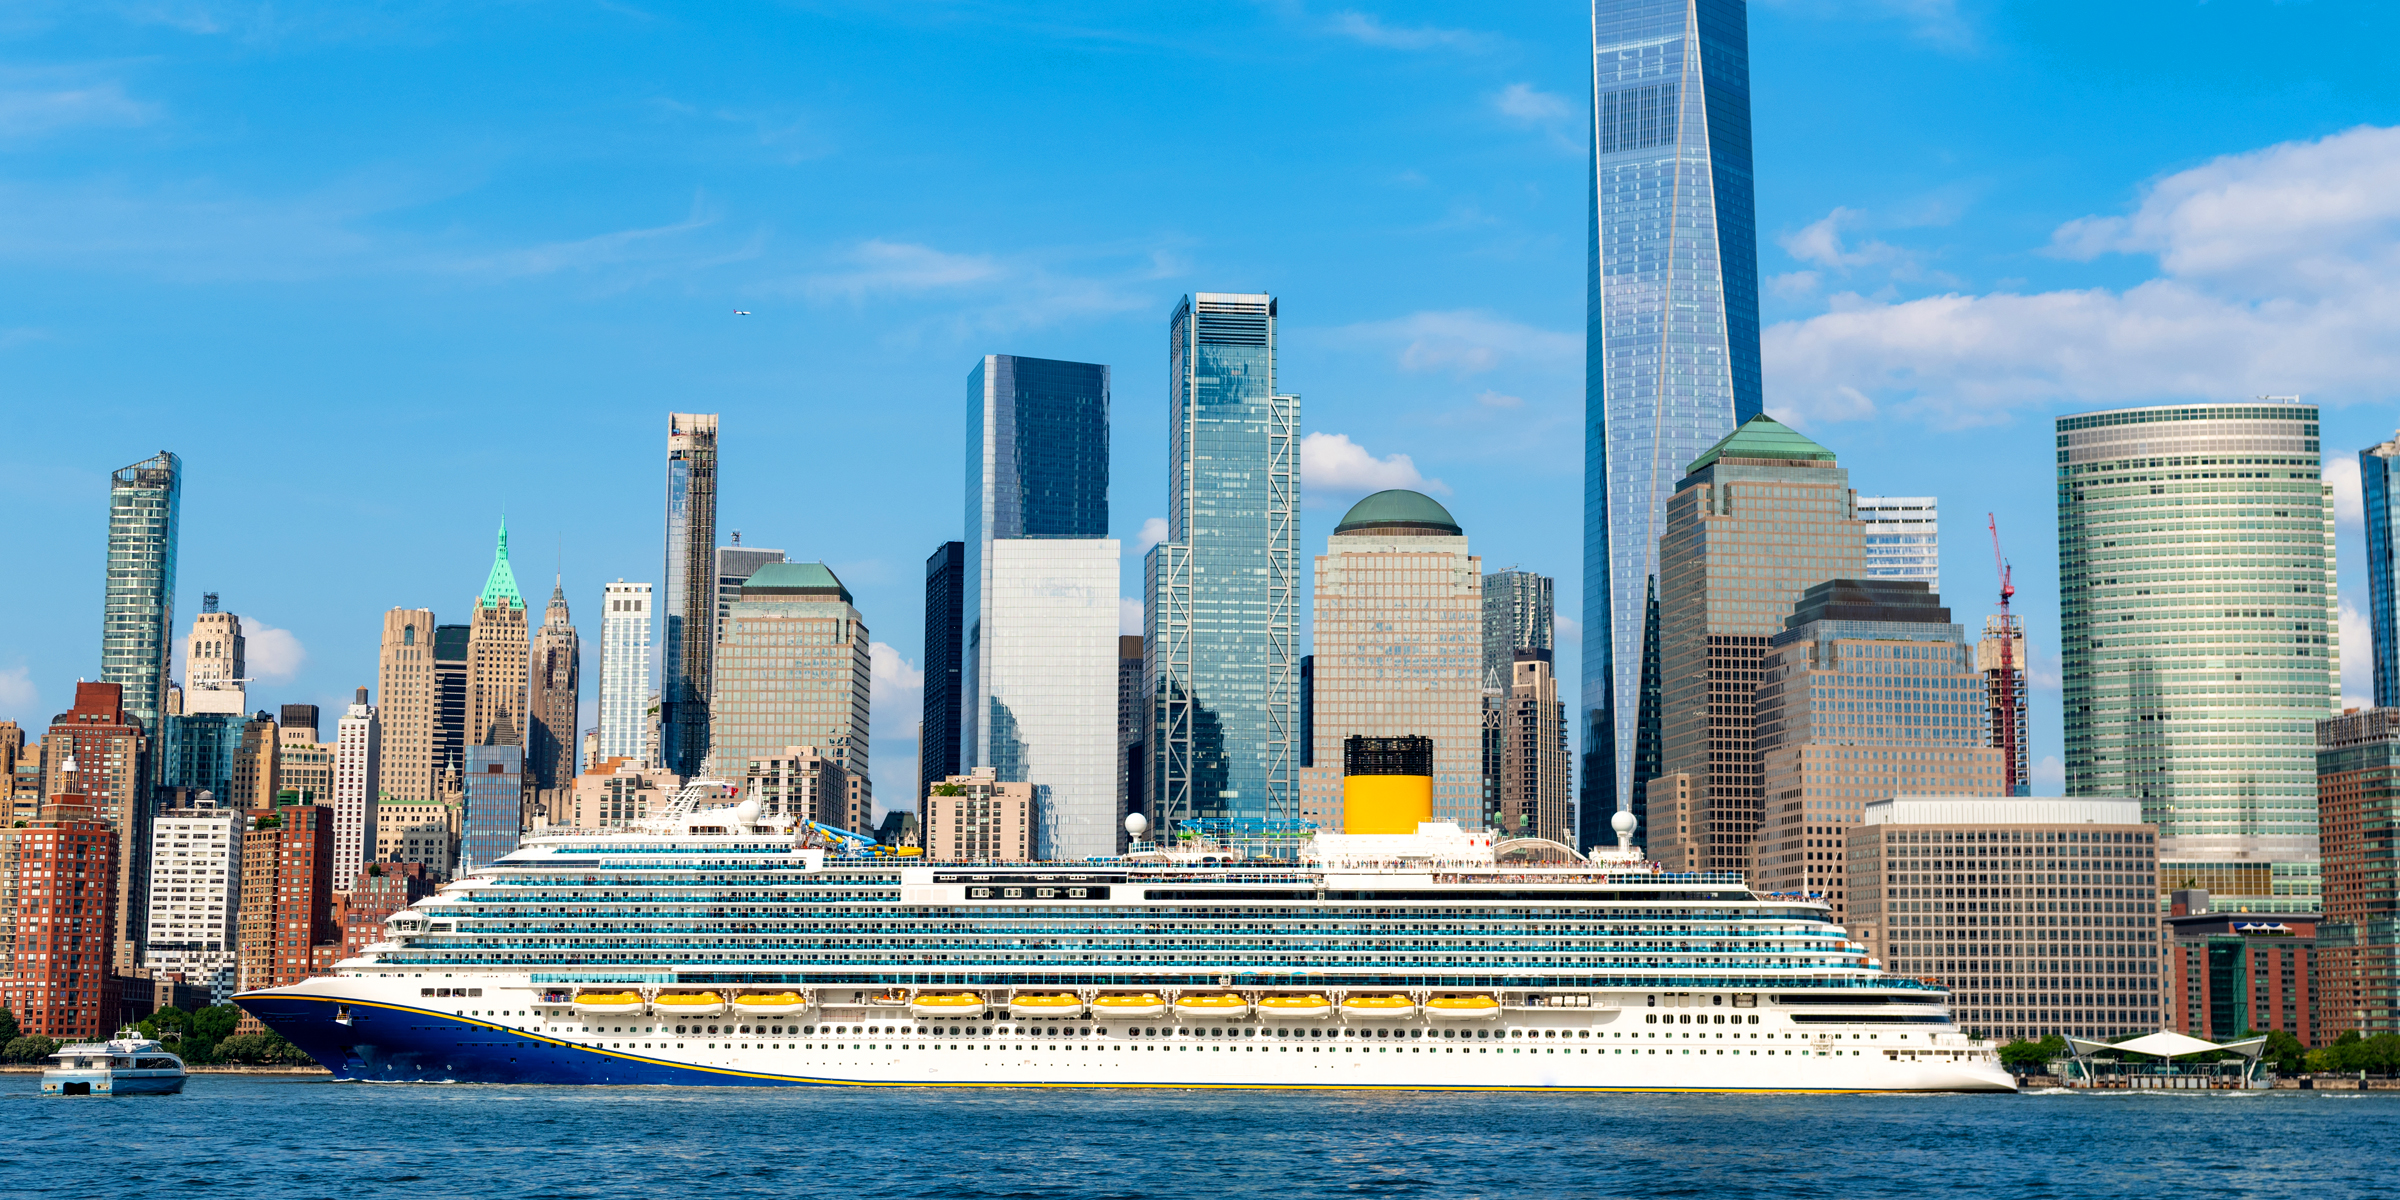 New York Cruise Port | Source: Shutterstock